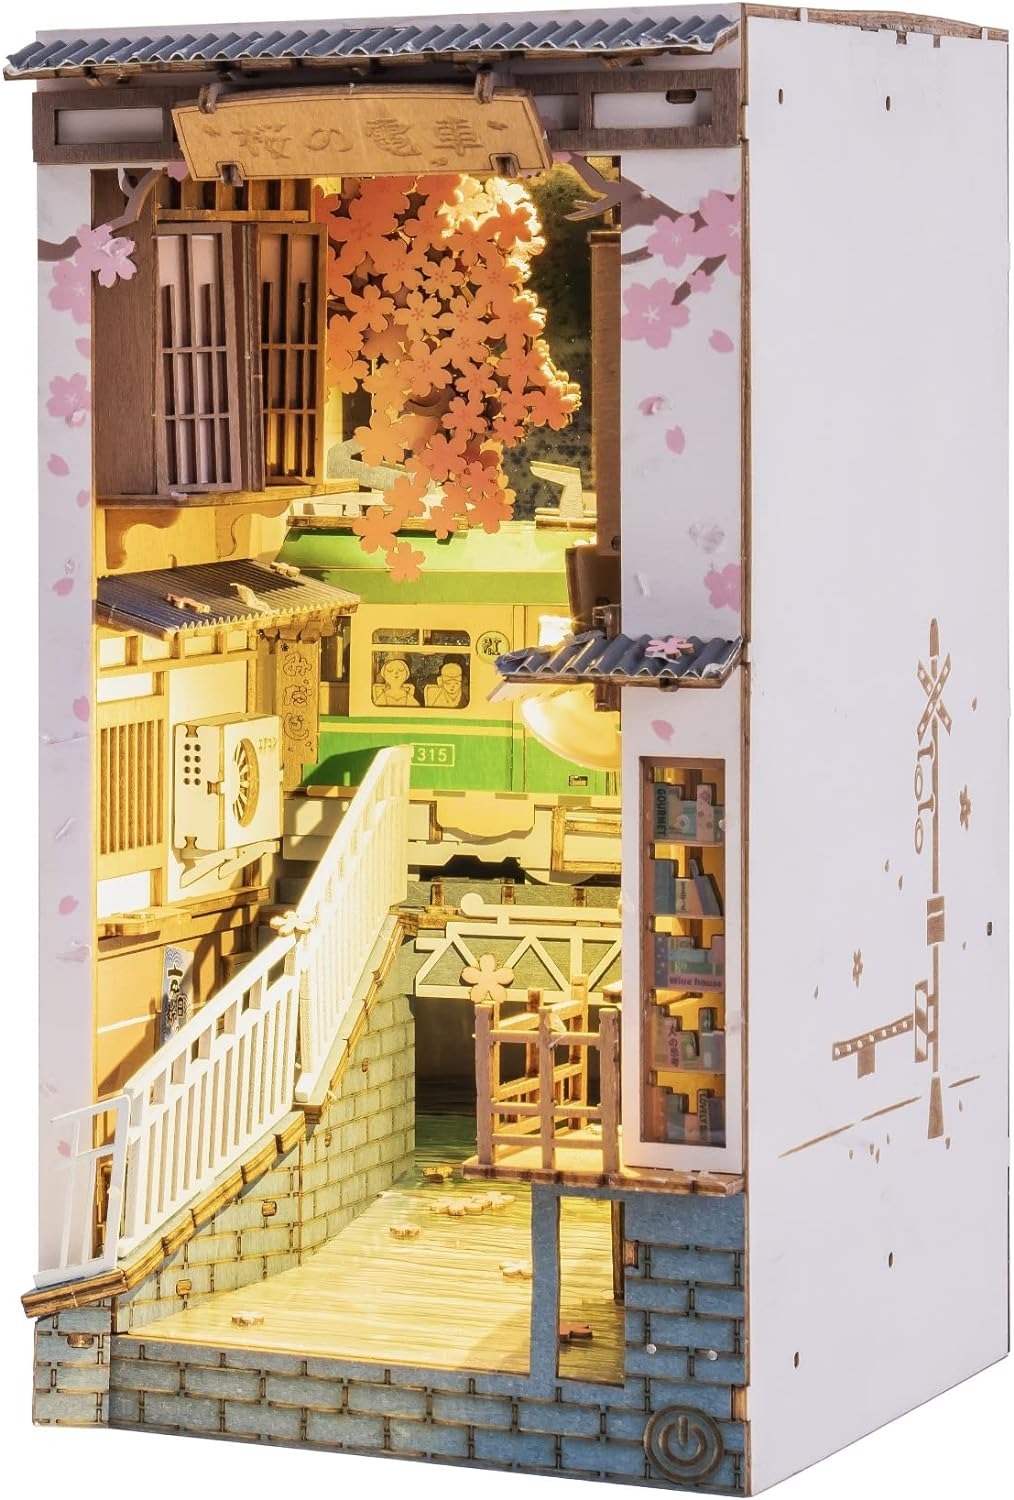 Rowood Book Nook Kit: 3D Wooden Puzzle/Bookshelf Decor w/ LED Light (Sakura Tram) $24.90 + Free Shipping w/ Prime or $35+ orders